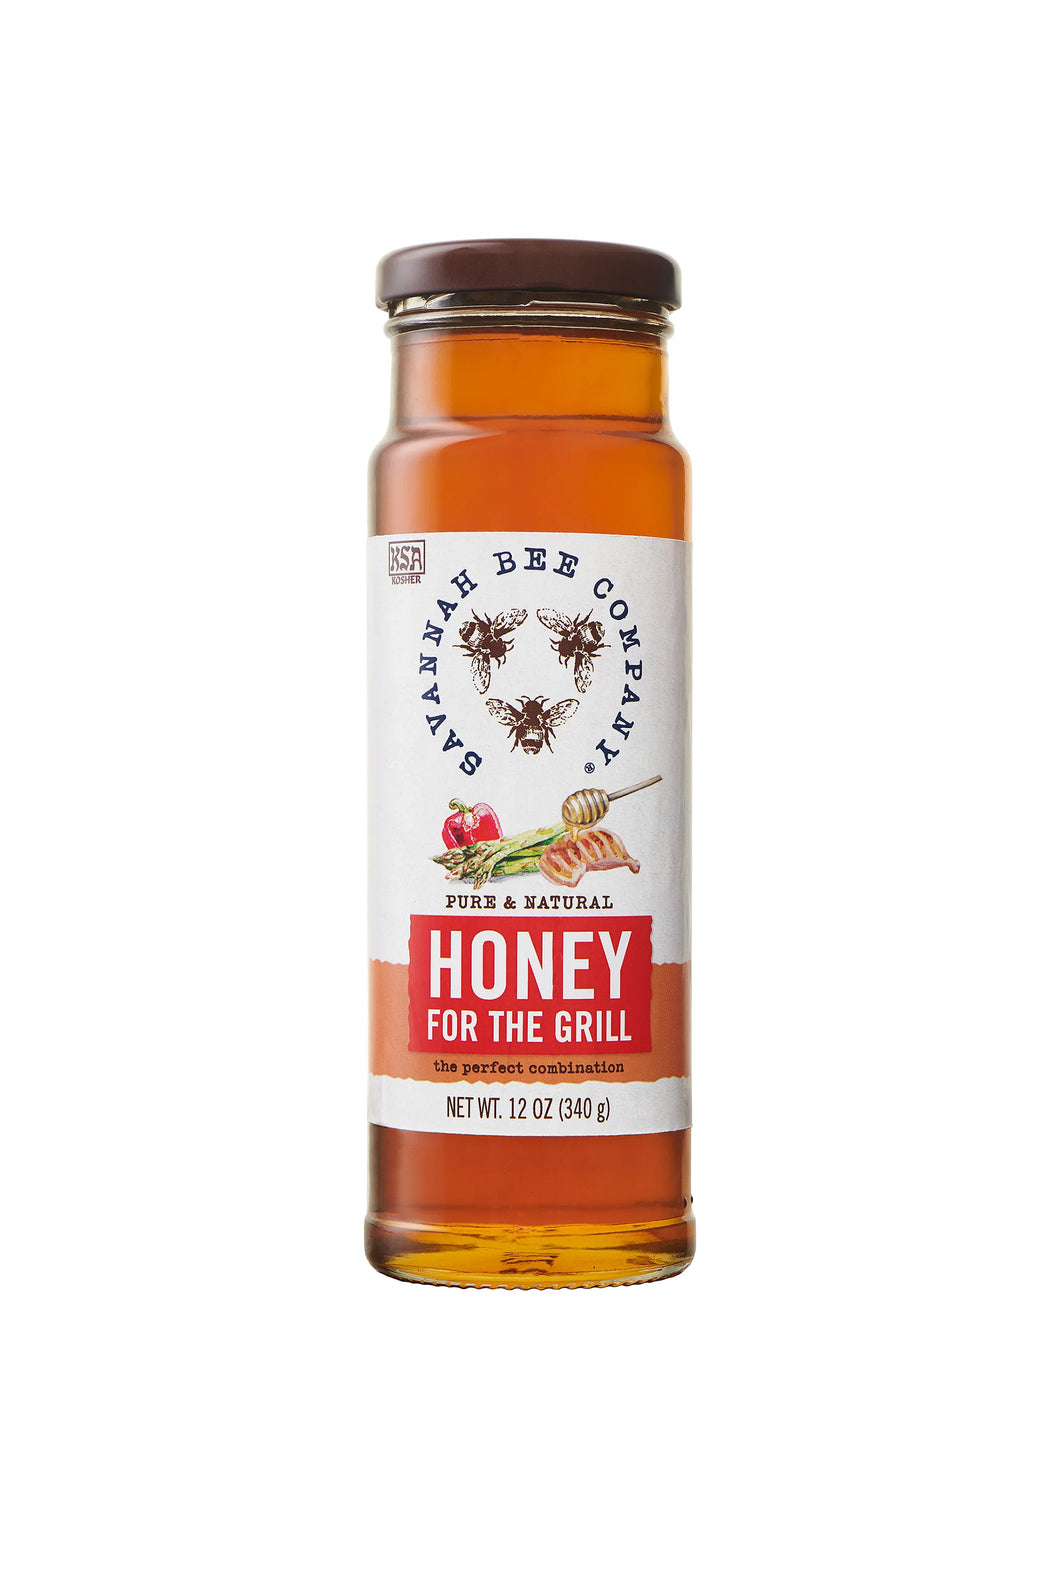 Savannah Bee Company Honey for the Grill